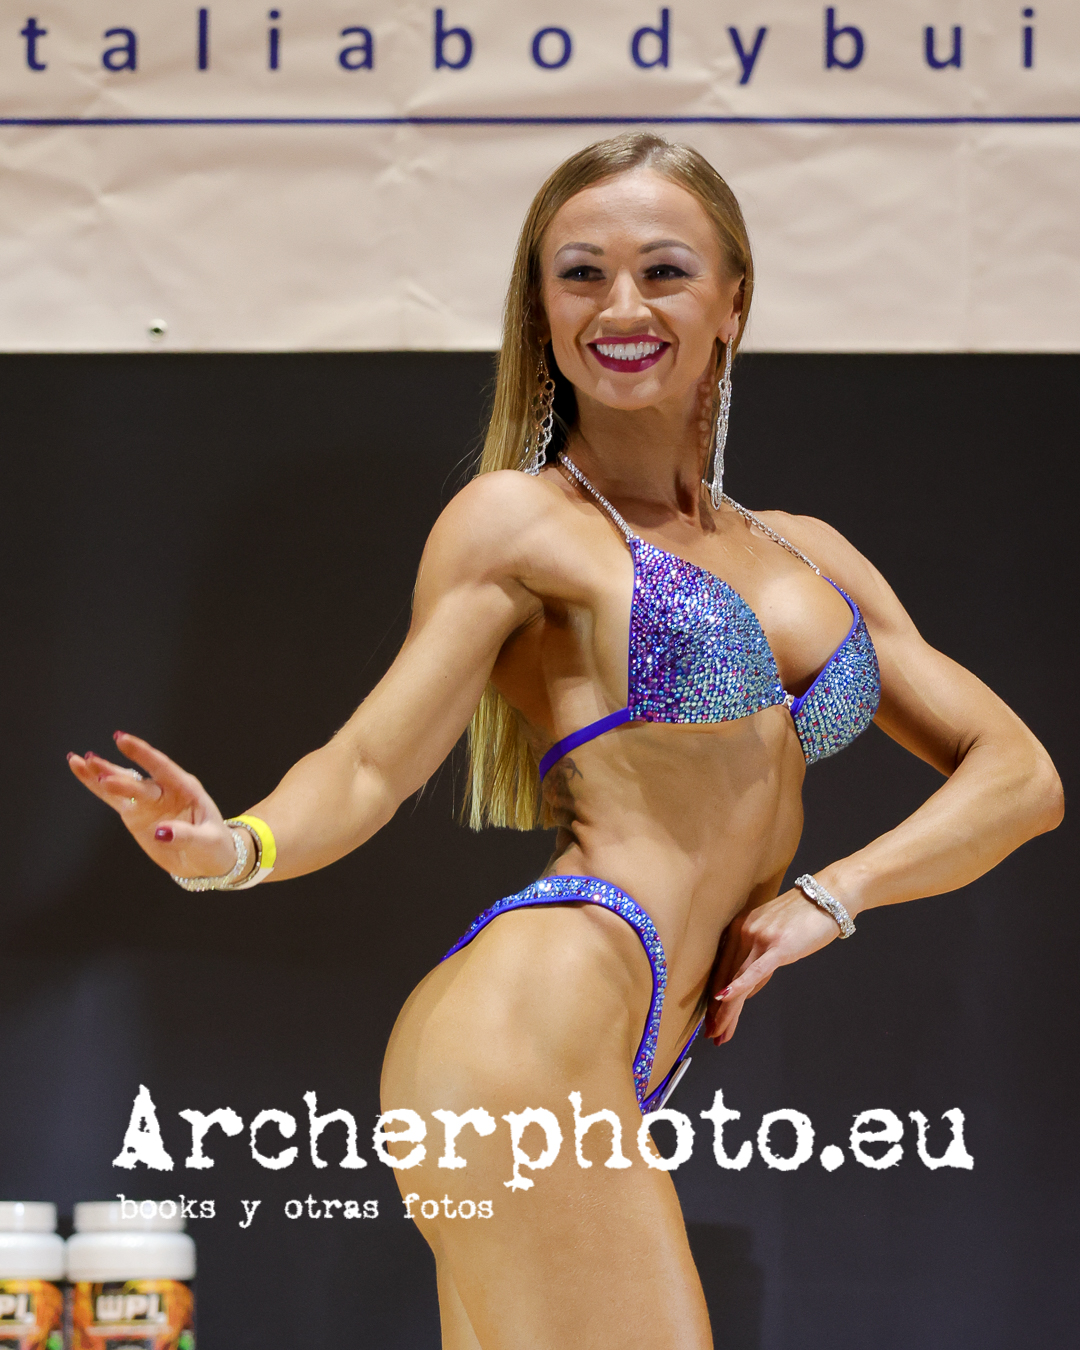 Campeonato de fisicoculturismo y fitness 6-11-2022: Karina Maniliak, 2022, ganadora absoluta Bikini, Mr. Universe CIBB Llíria